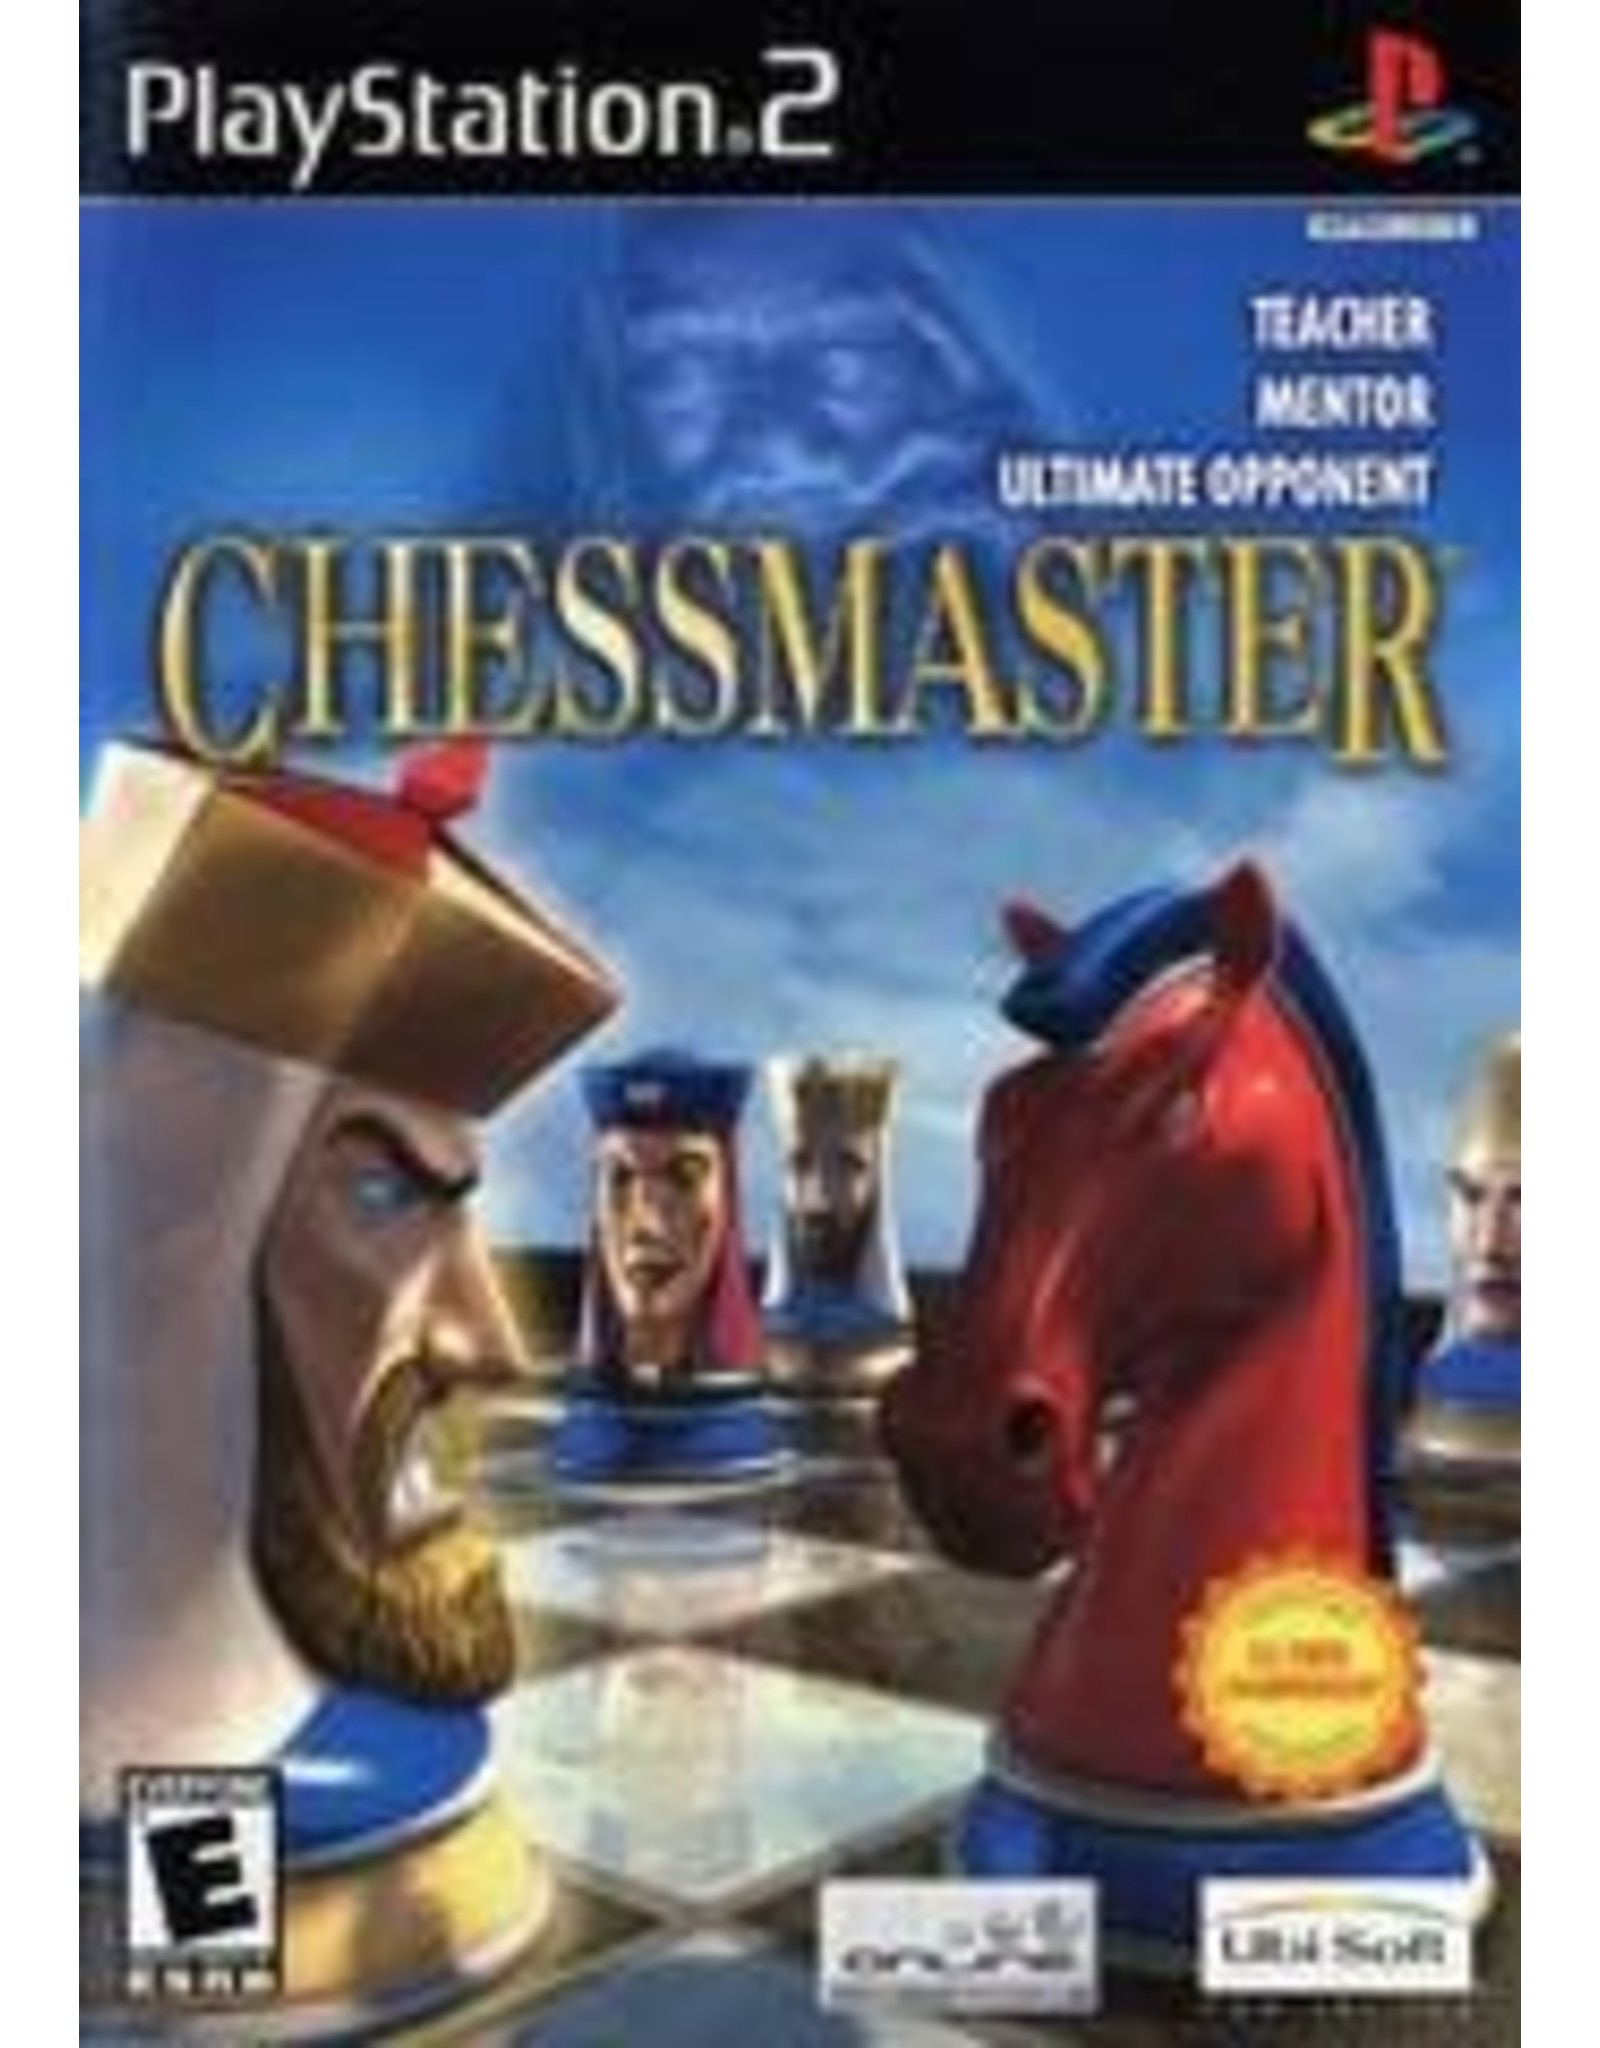 Playstation 2 Chessmaster (CiB)